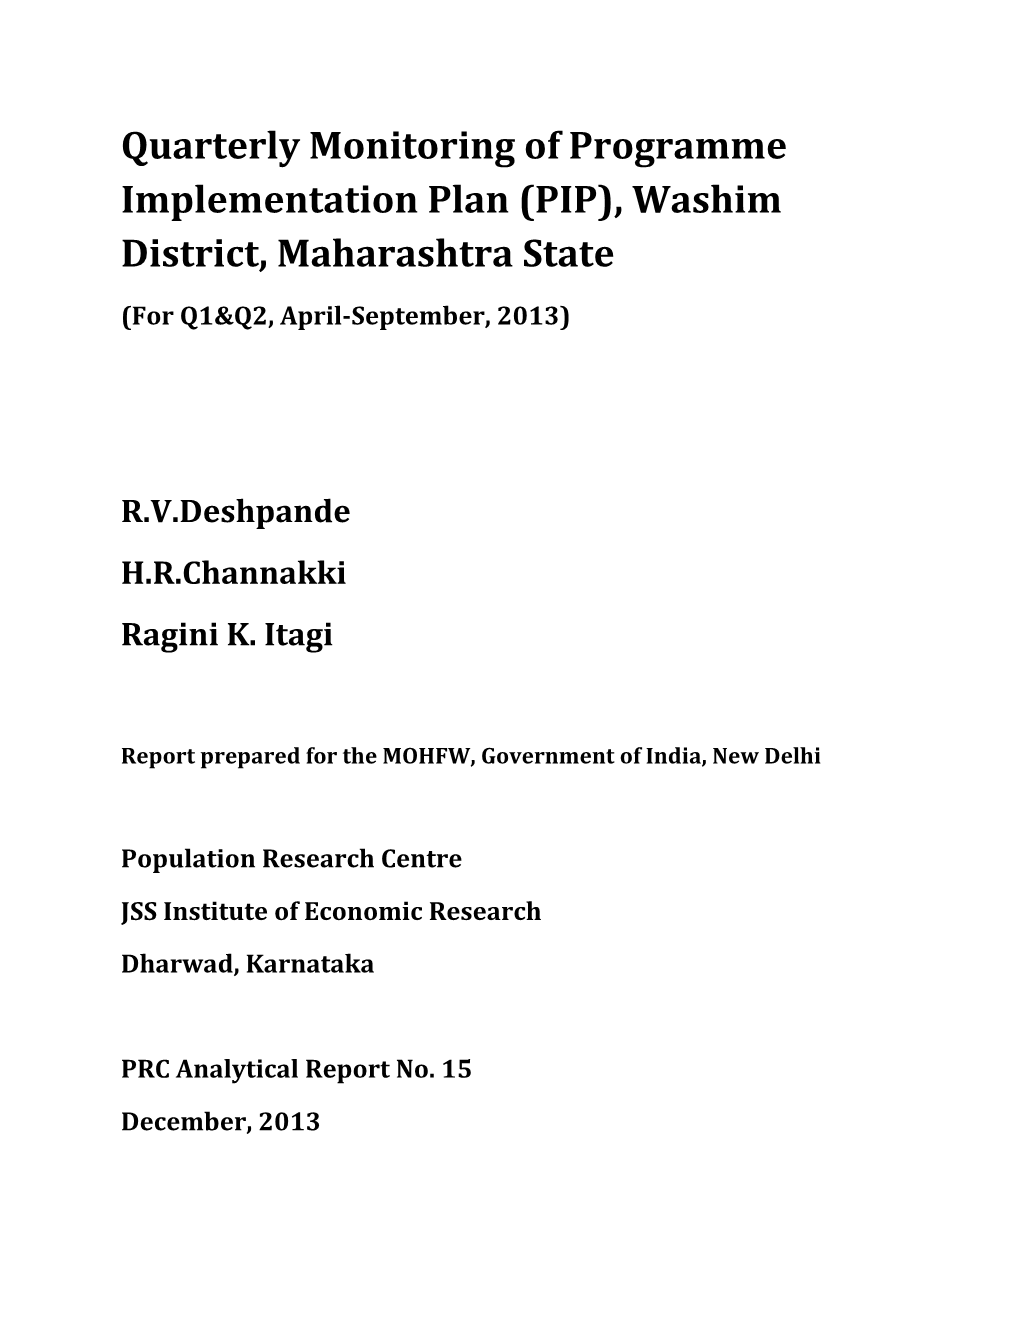 Washim - PIP Report